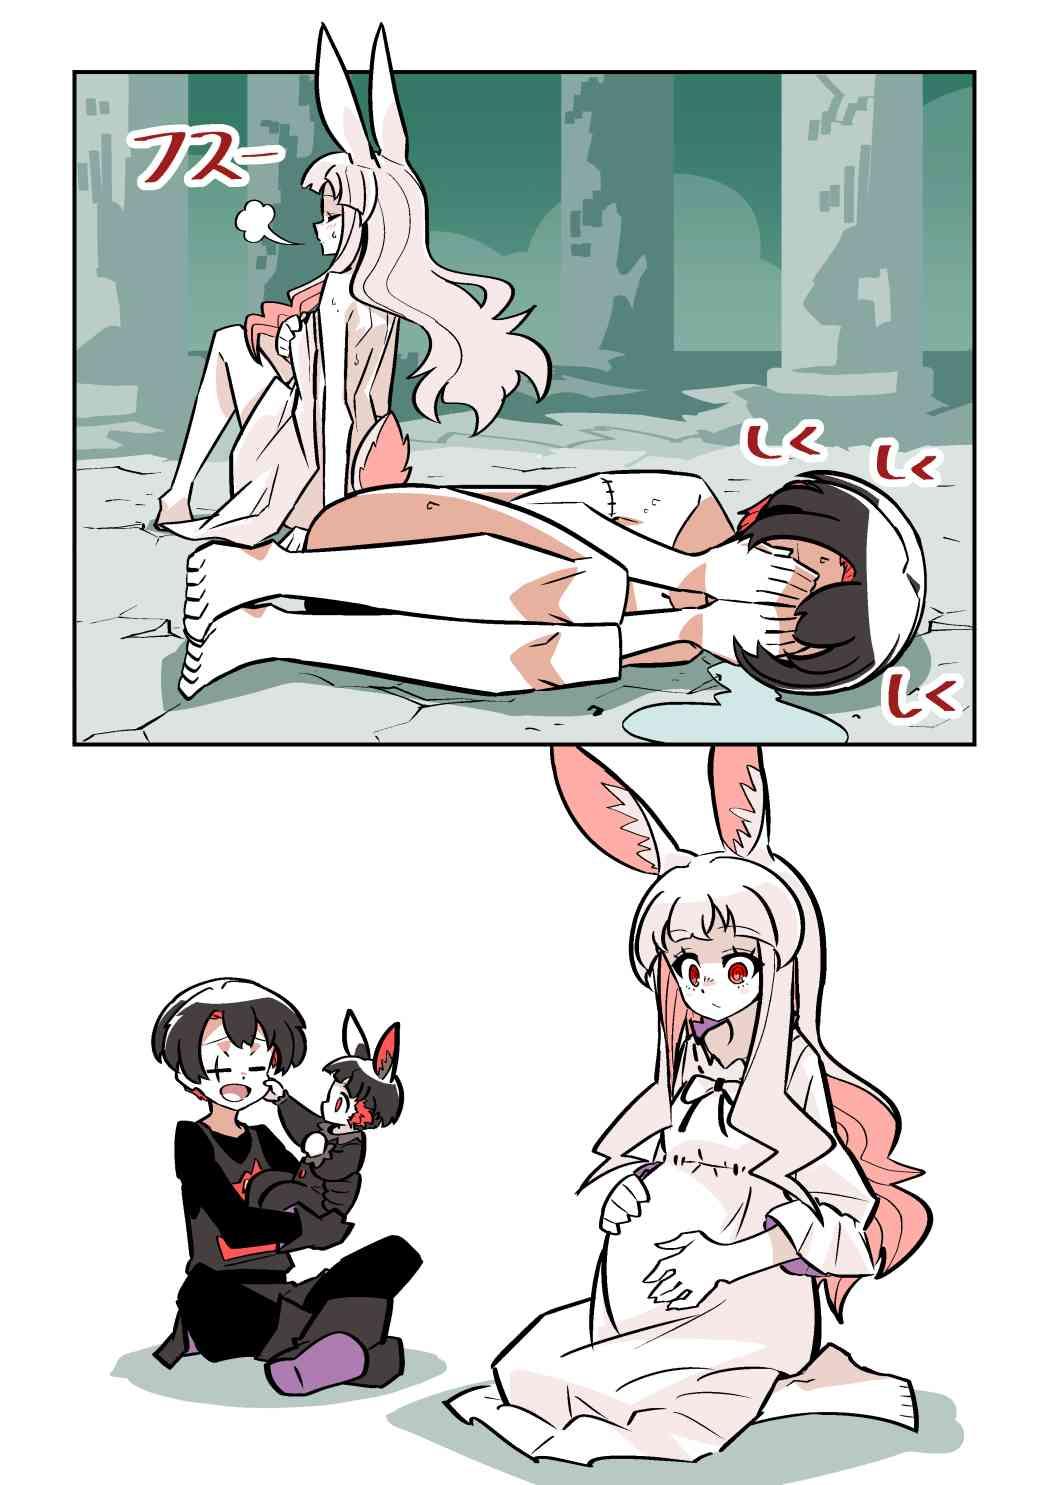 Murder Rabbit Girl vs Series 杀人兔娘 35